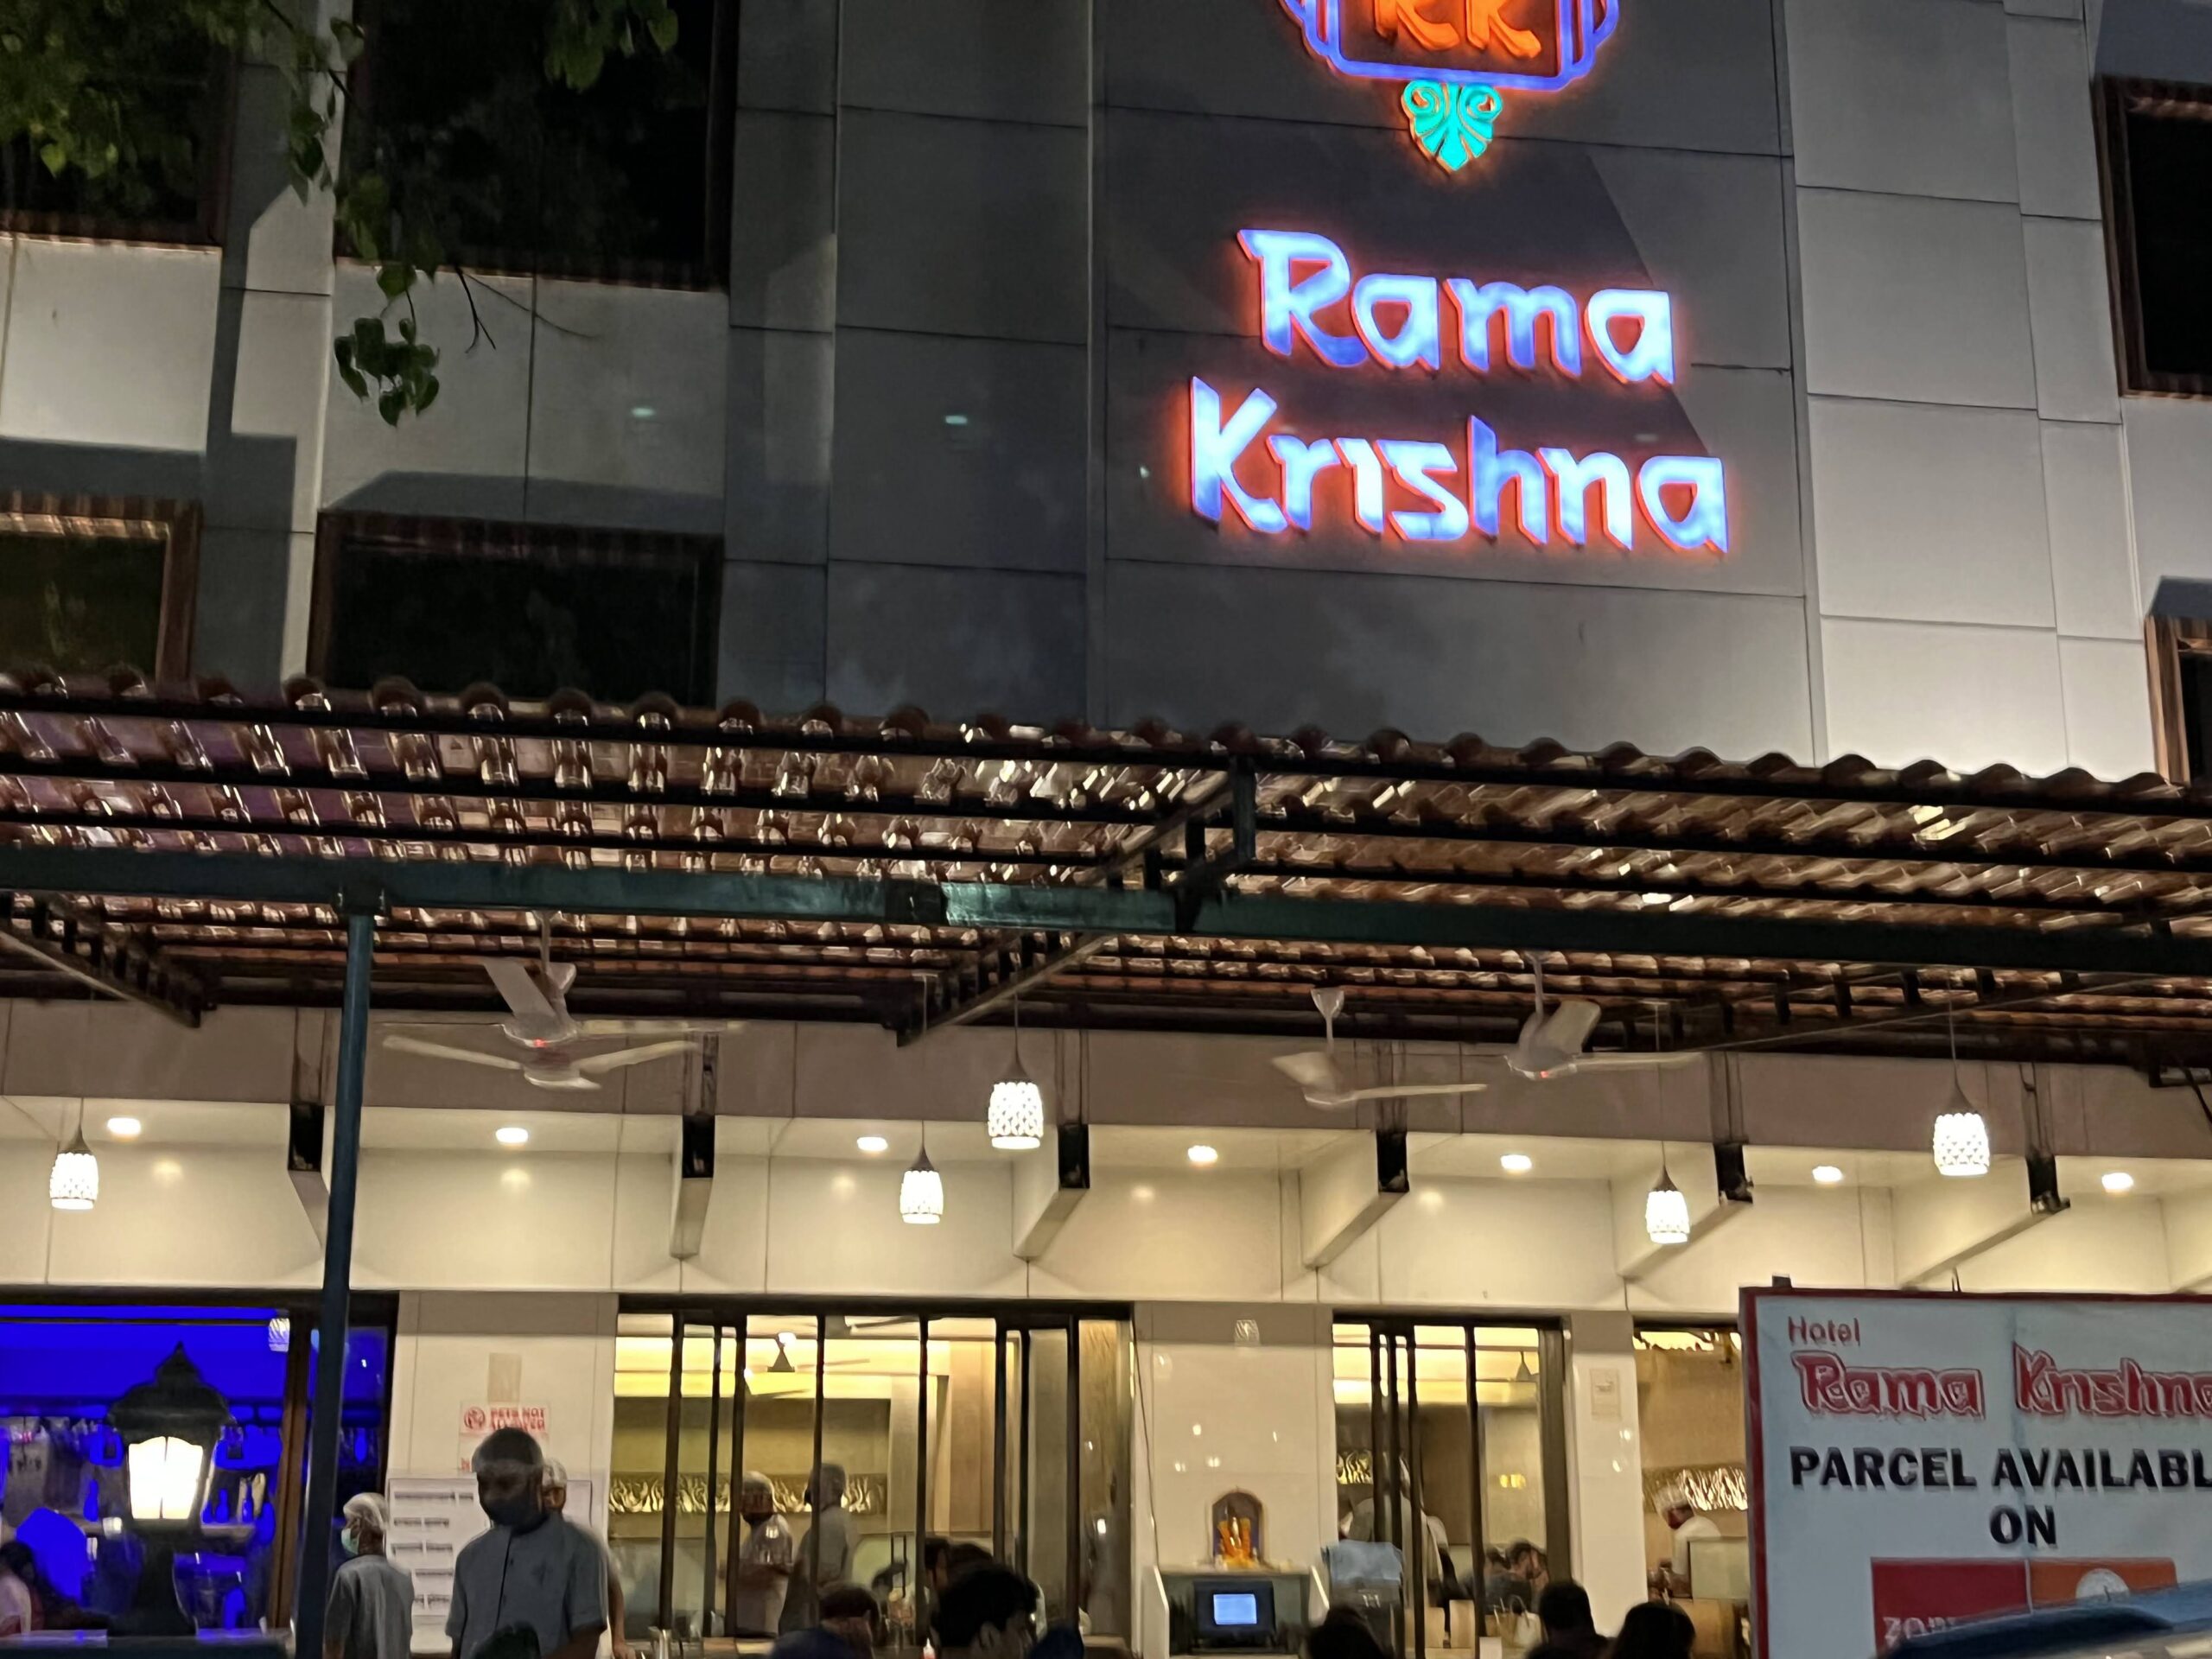 Rama Krishna - a popular local restaurant in Lonavala